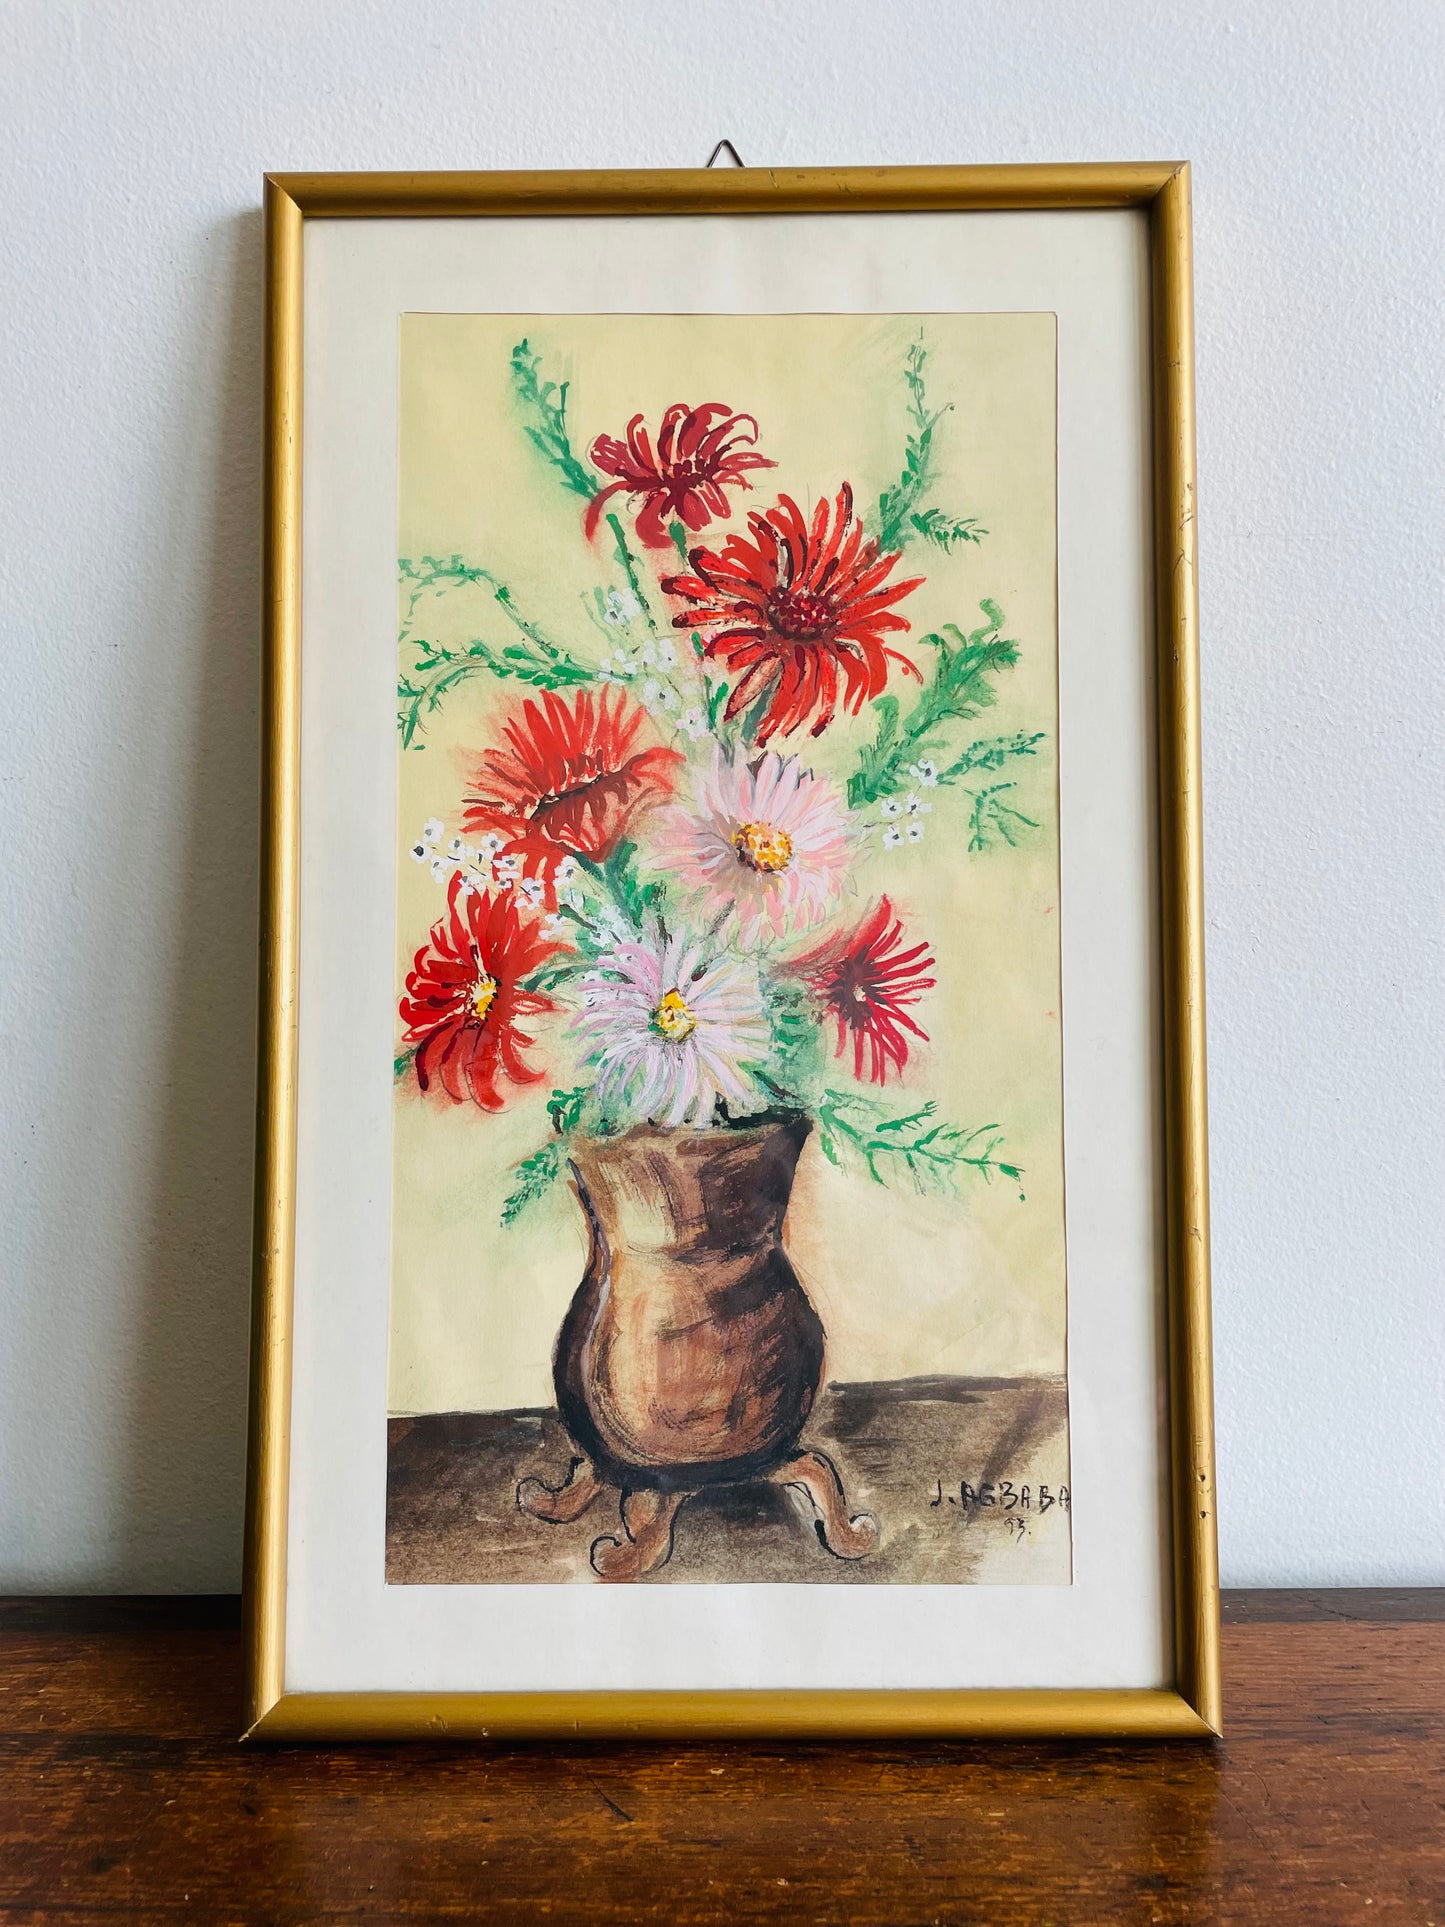 Original Art - Painting of Flowers in Vase - Artist Signed (1993)